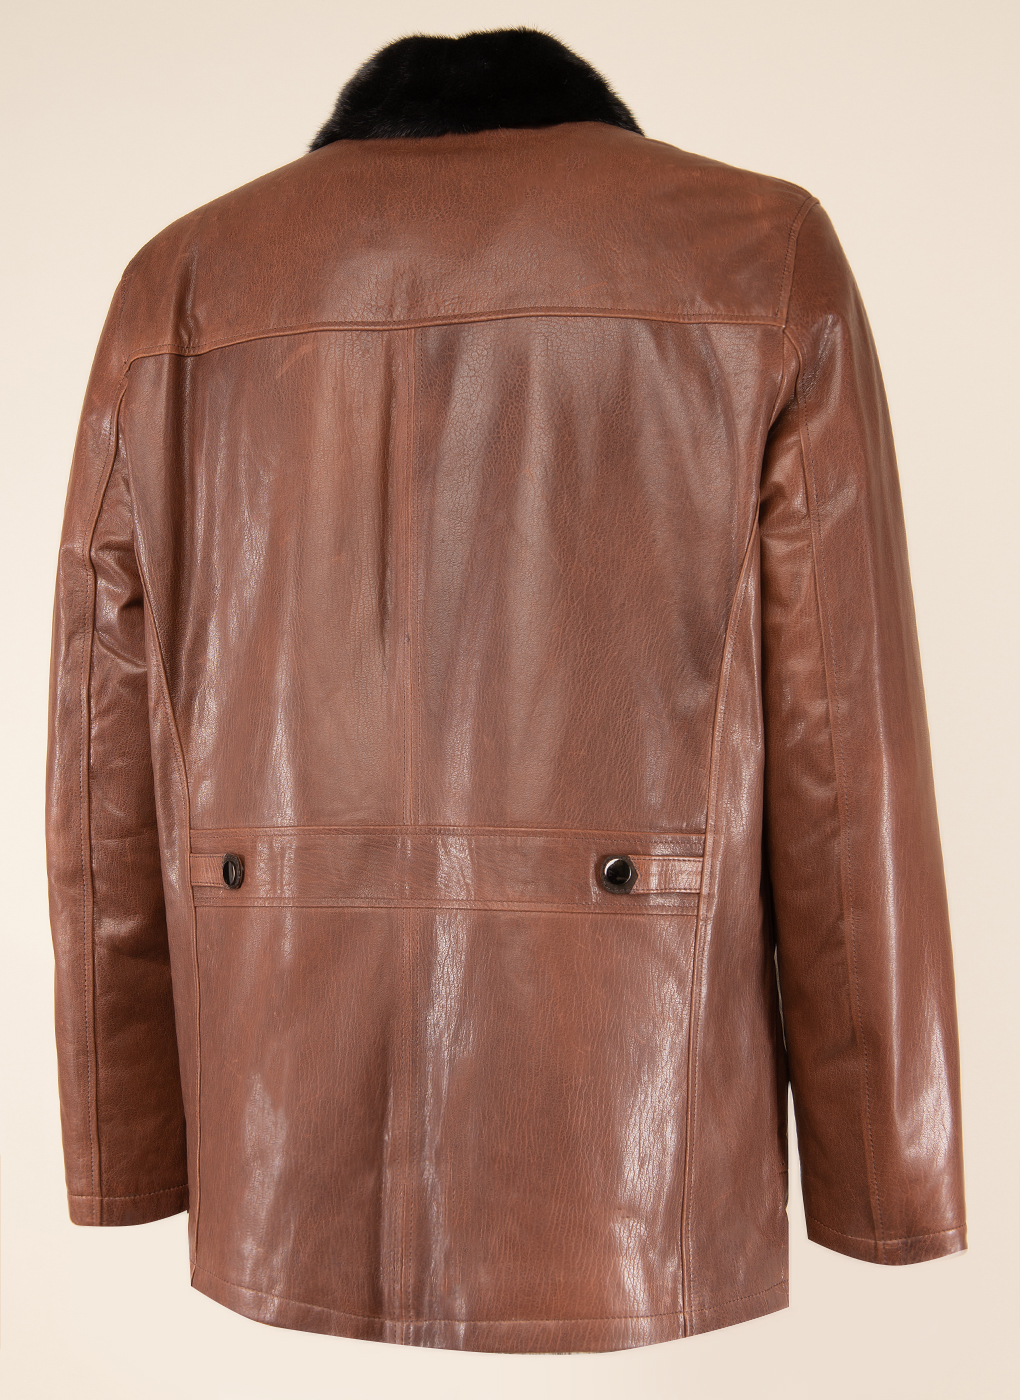 Кожаная куртка мужская Ennur 50435 коричневая 54 RU